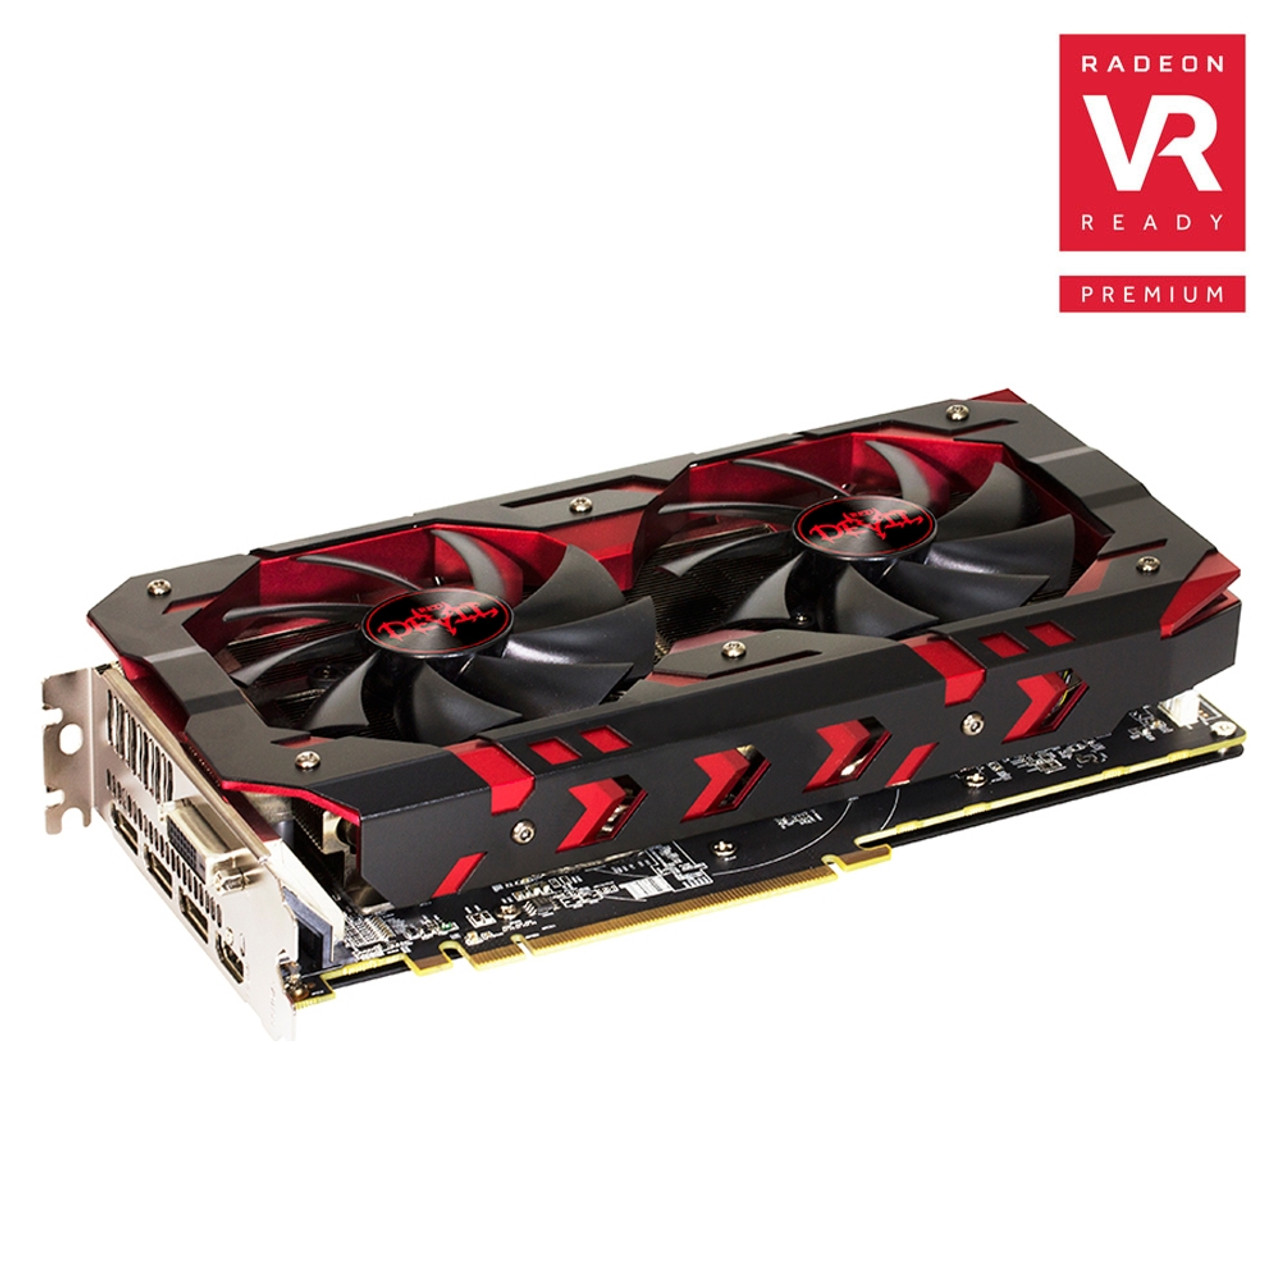 | PowerColor Radeon RX-580 Red Devil Overclocked 8GB GDDR5 Card